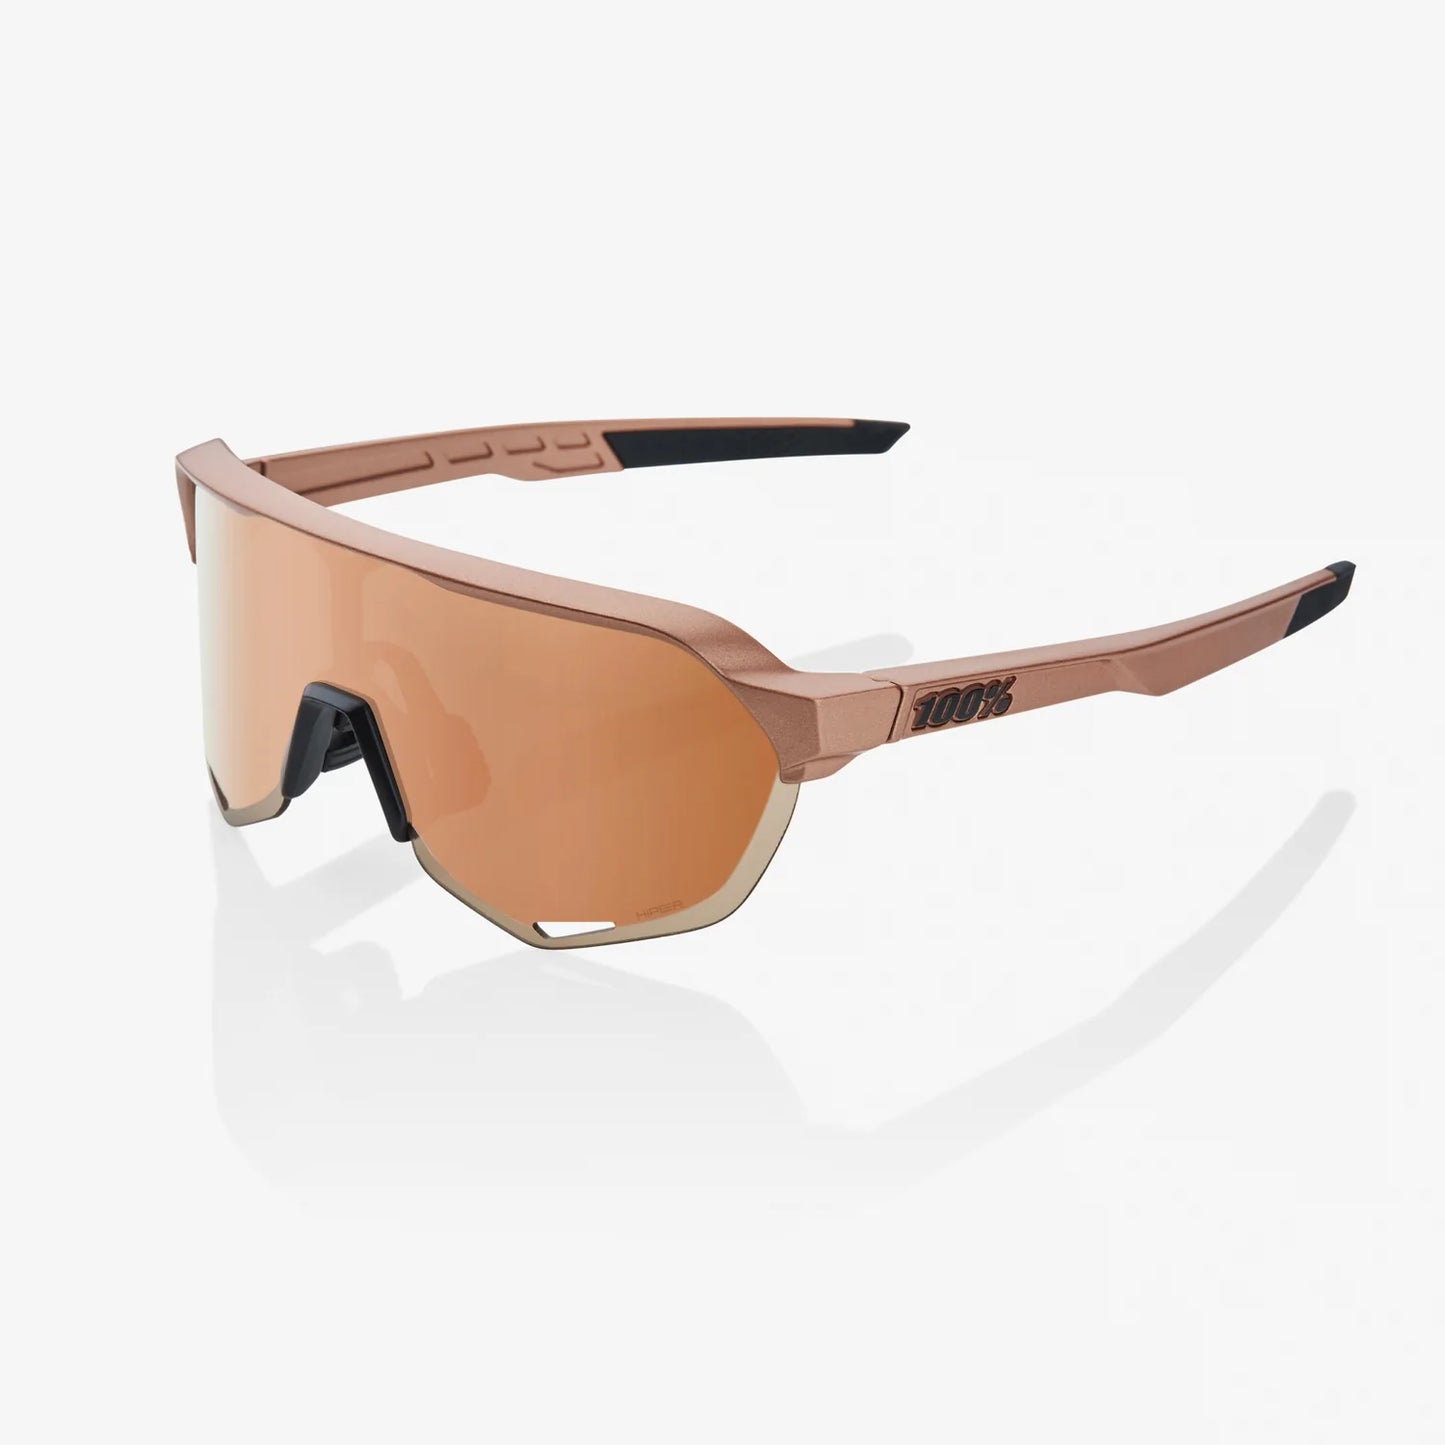 100 Percent Sunglasses - S2 - Matte Copper Chromium - HiPER Copper Mirror Lens